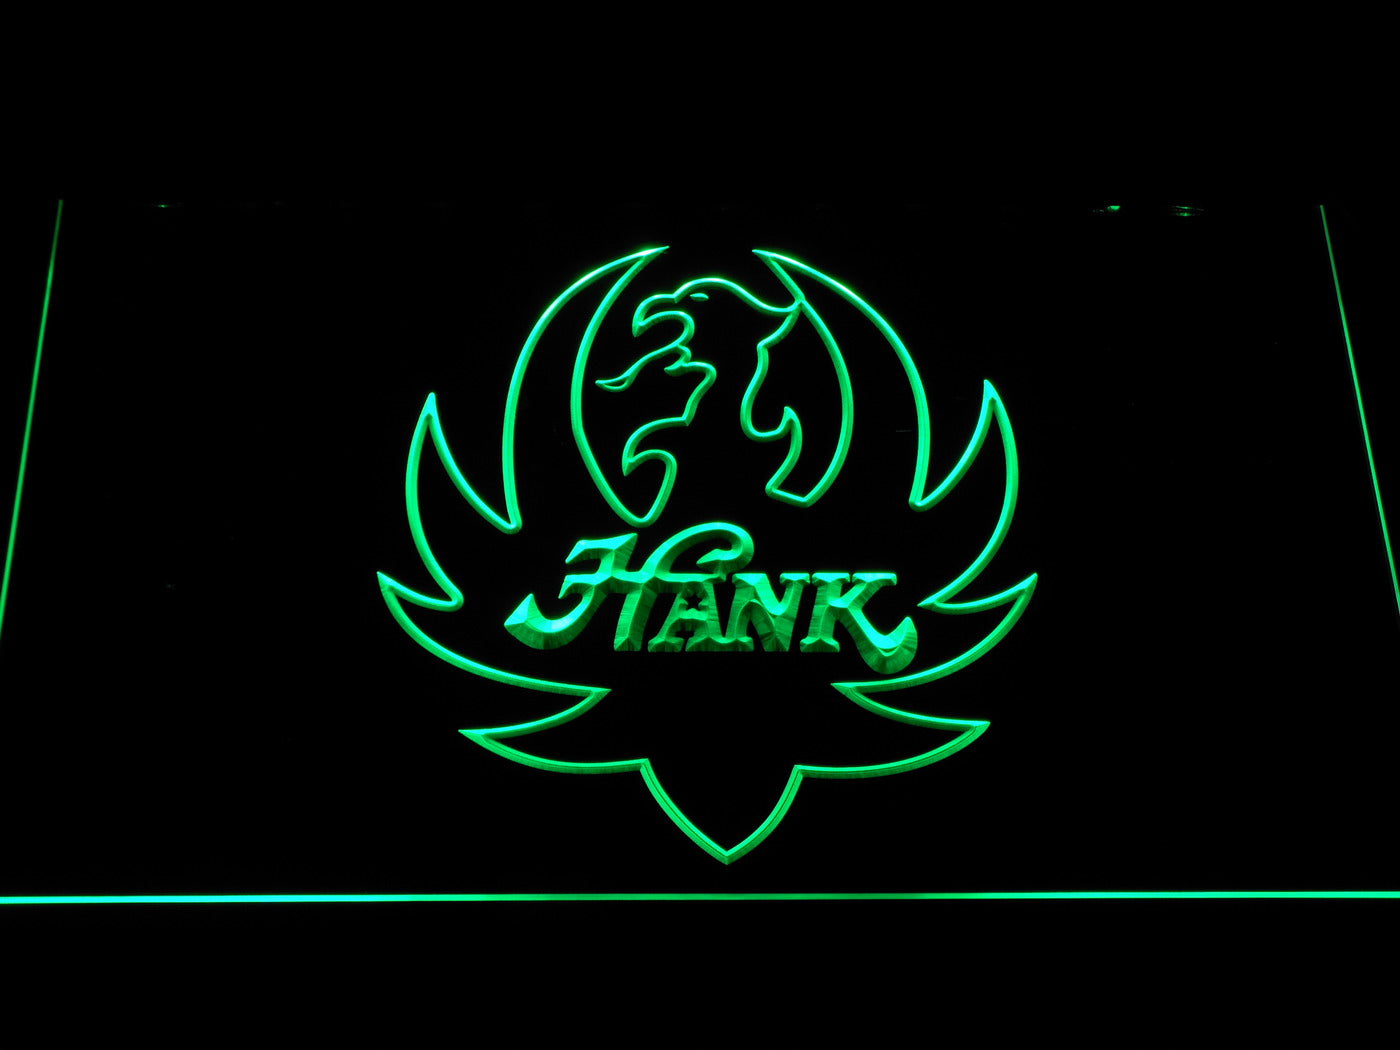 Hank Williams Music LED Neon Sign